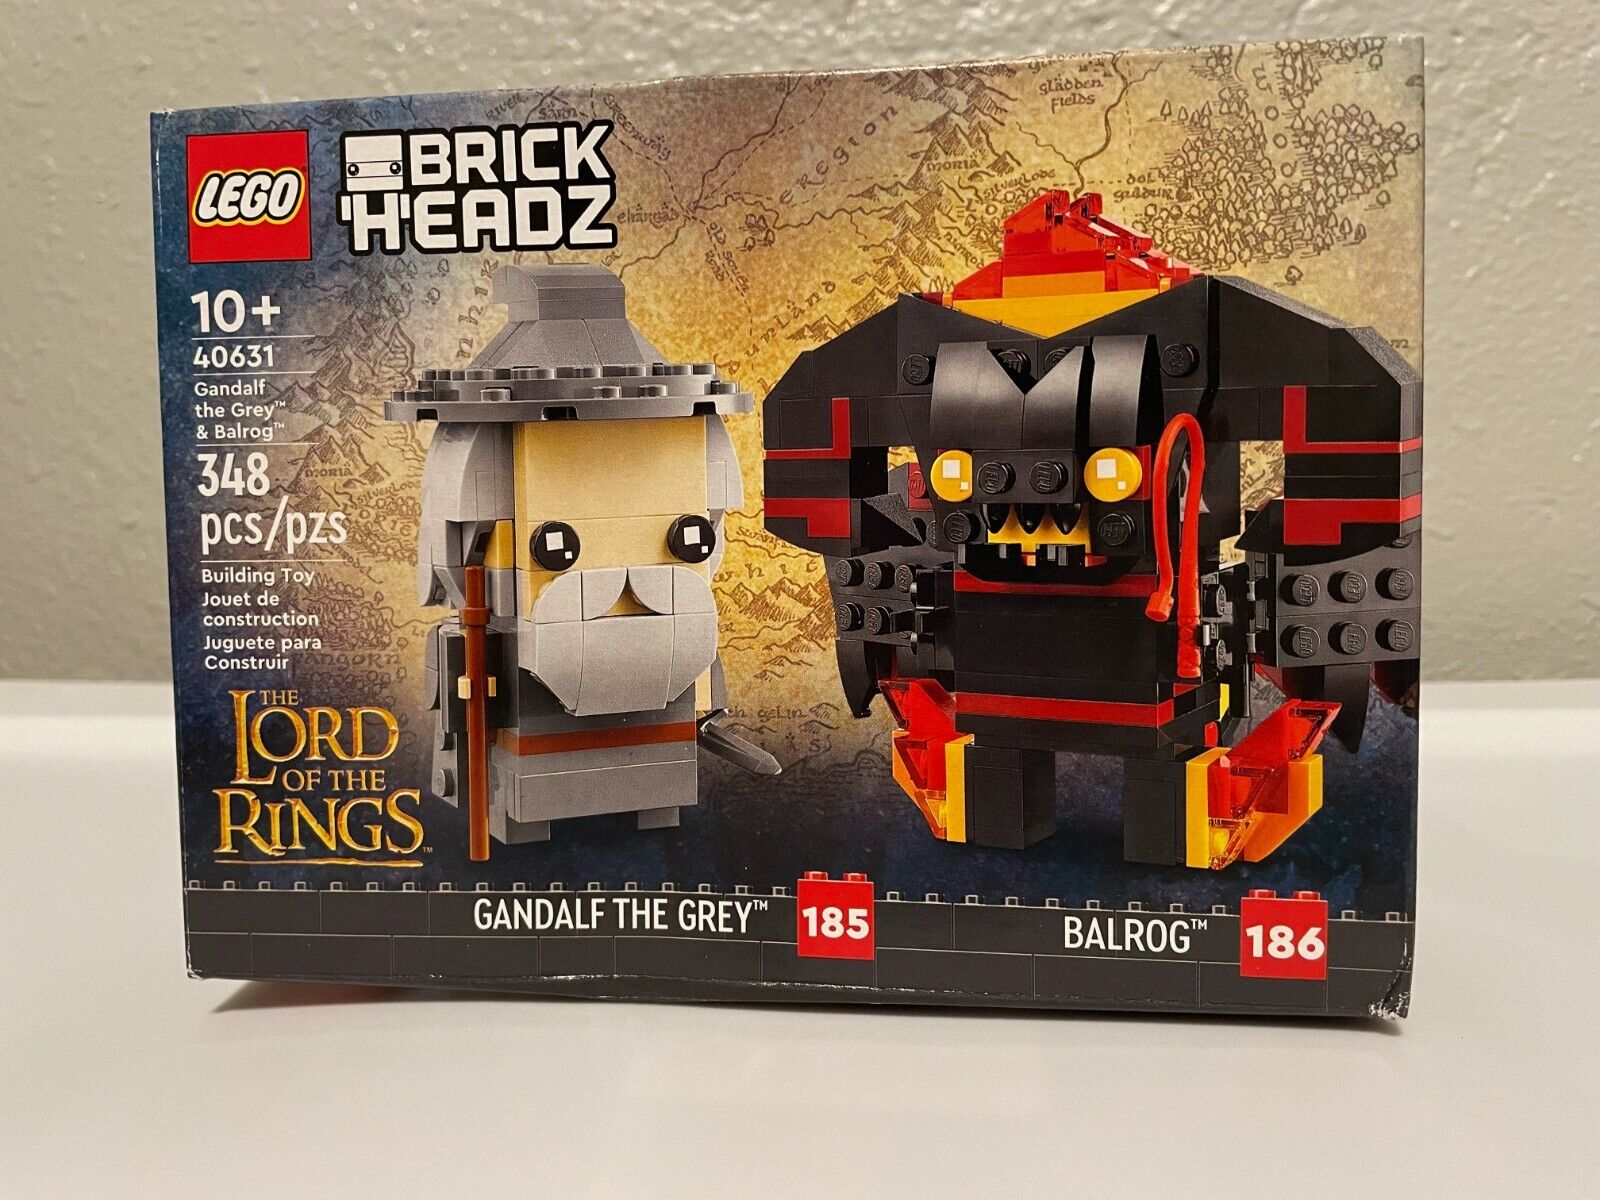 LEGO BRICKHEADZ: Gandalf the Grey & Balrog (40631)